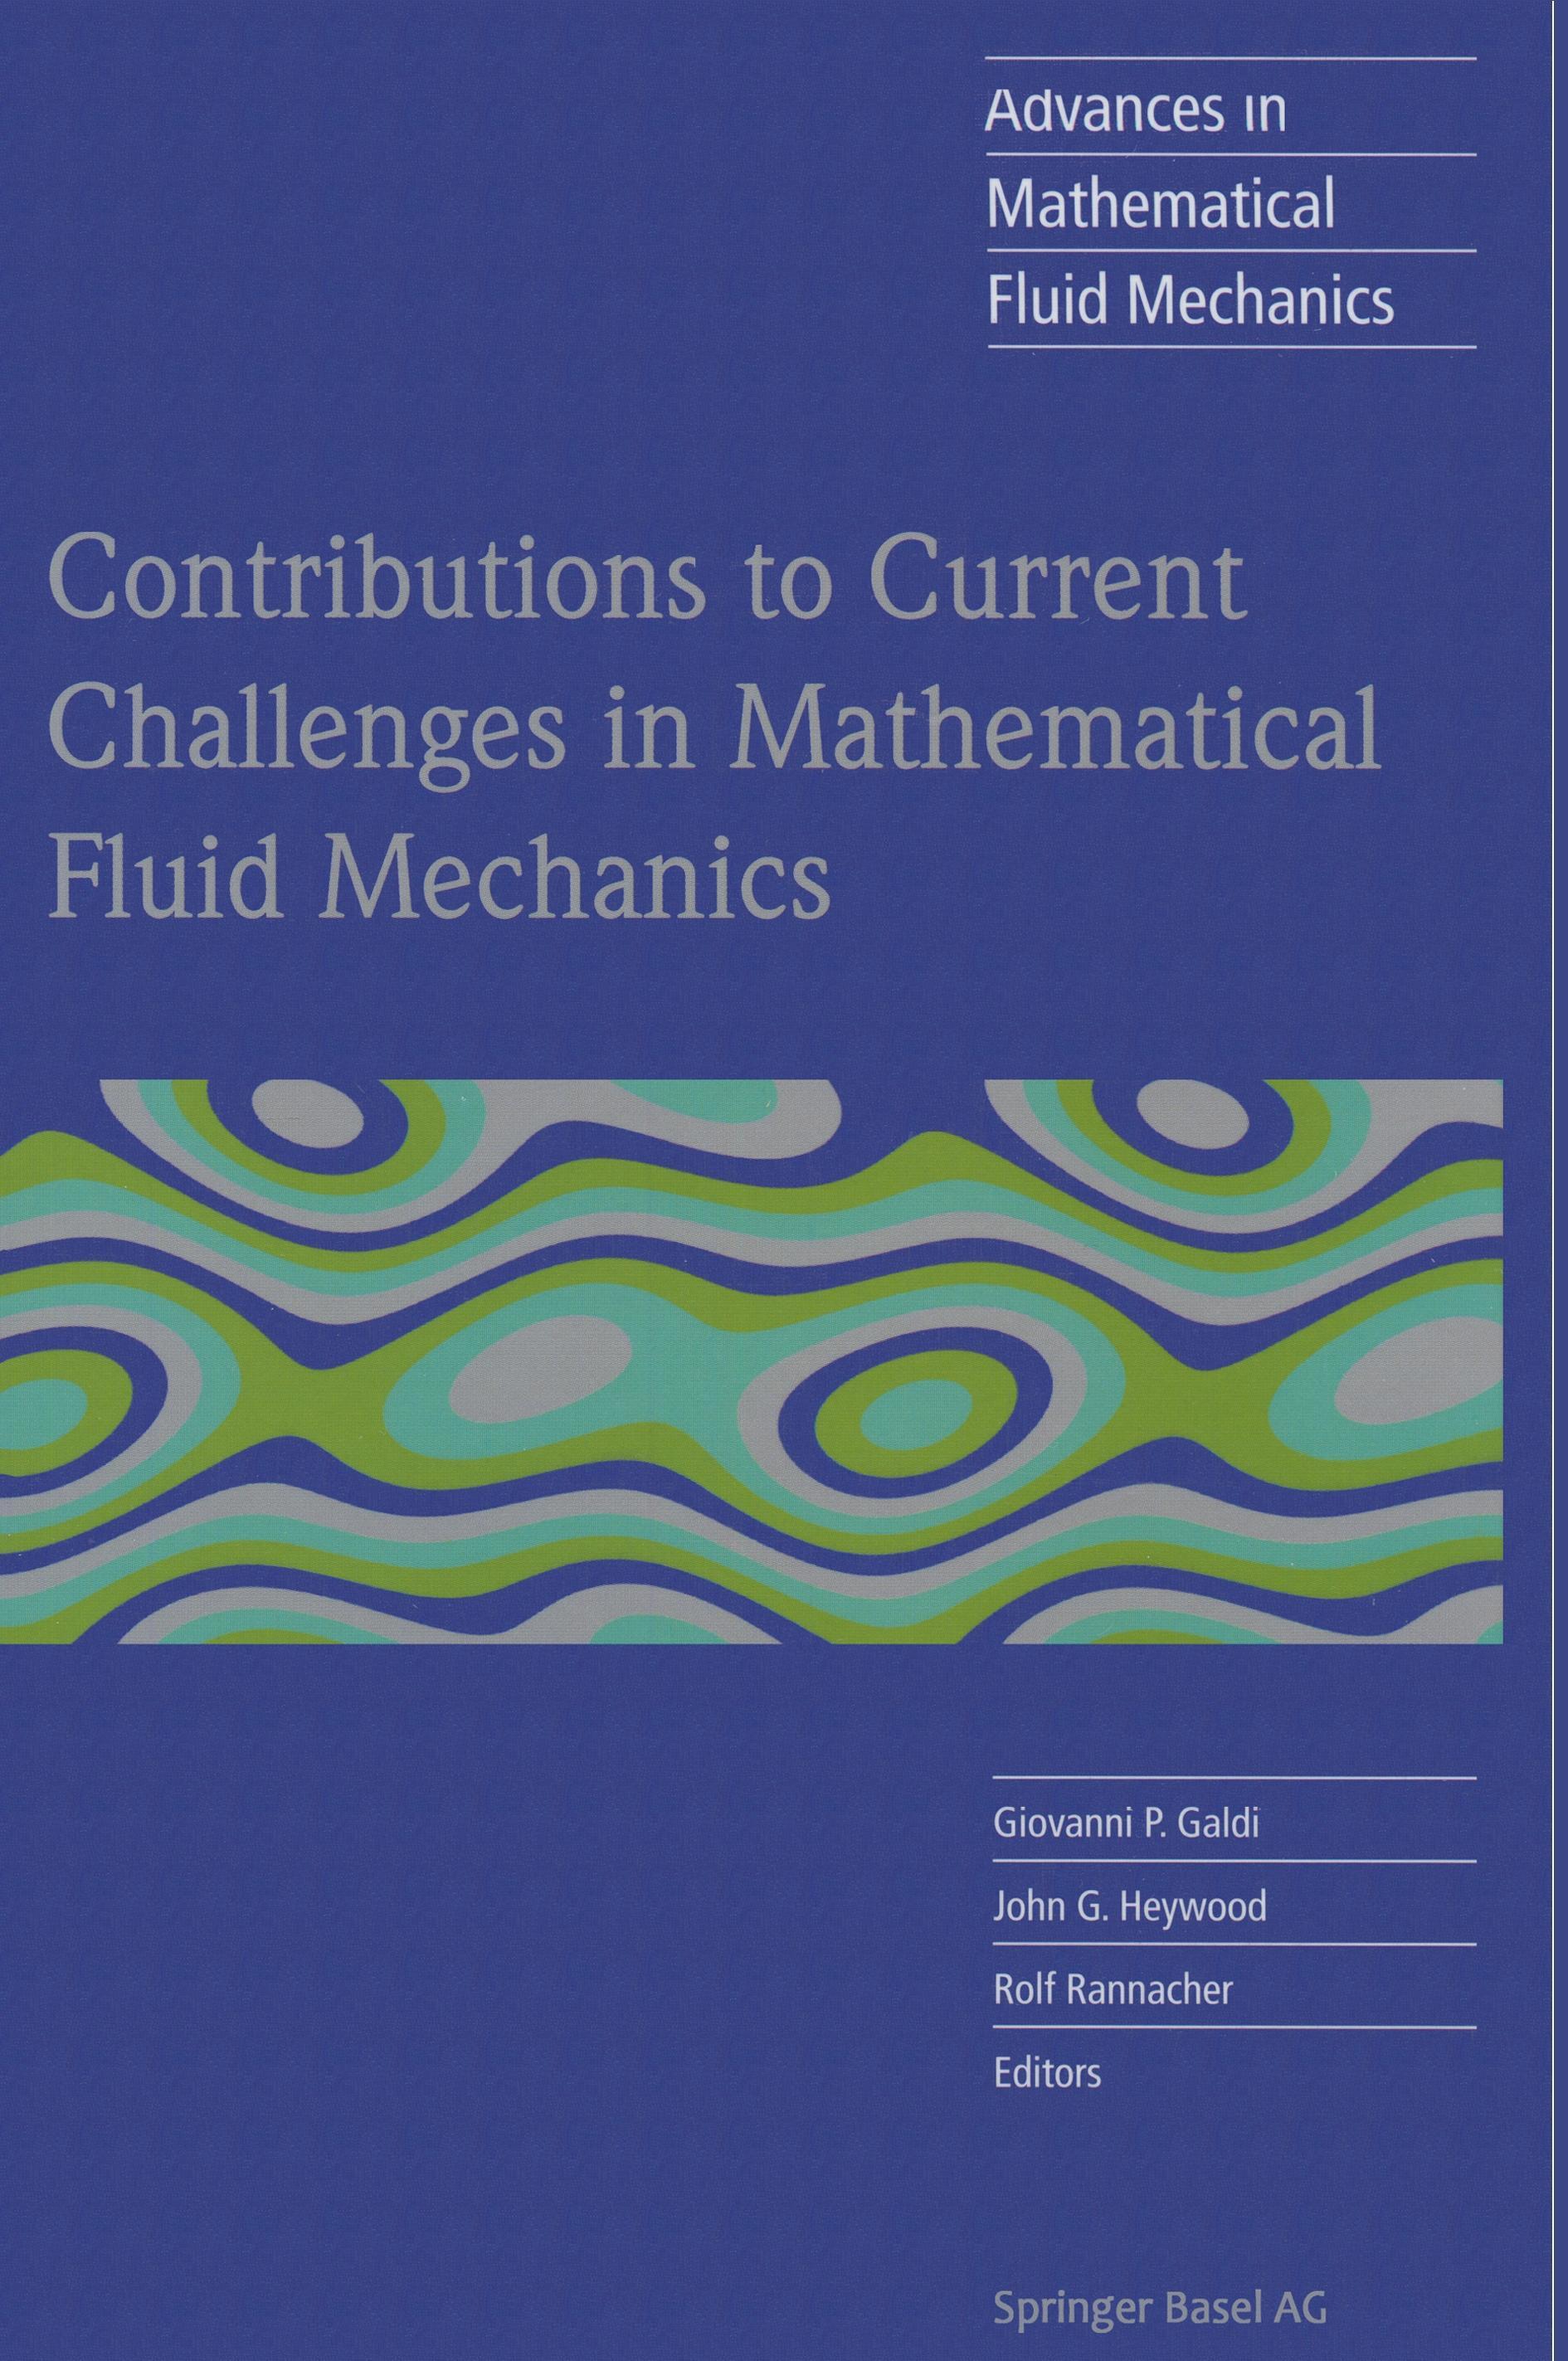 Contributions to Current Challenges in Mathematical Fluid Mechanics - Galdi, Paolo|Rannacher, Rolf|Heywood, John G.